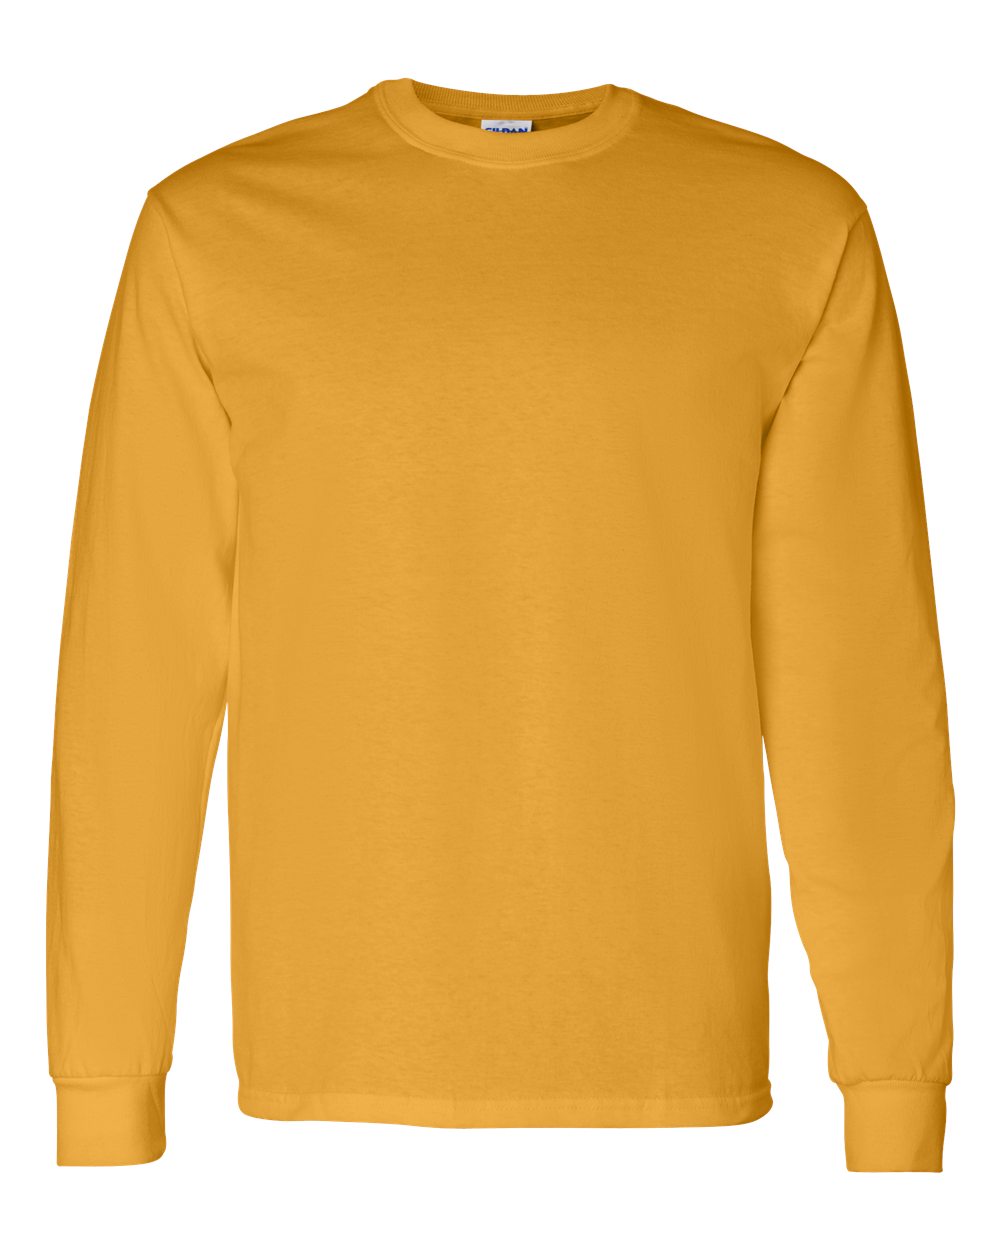 Pretreated Gildan 5400 Heavy Cotton Long Sleeve T-Shirt - Gold